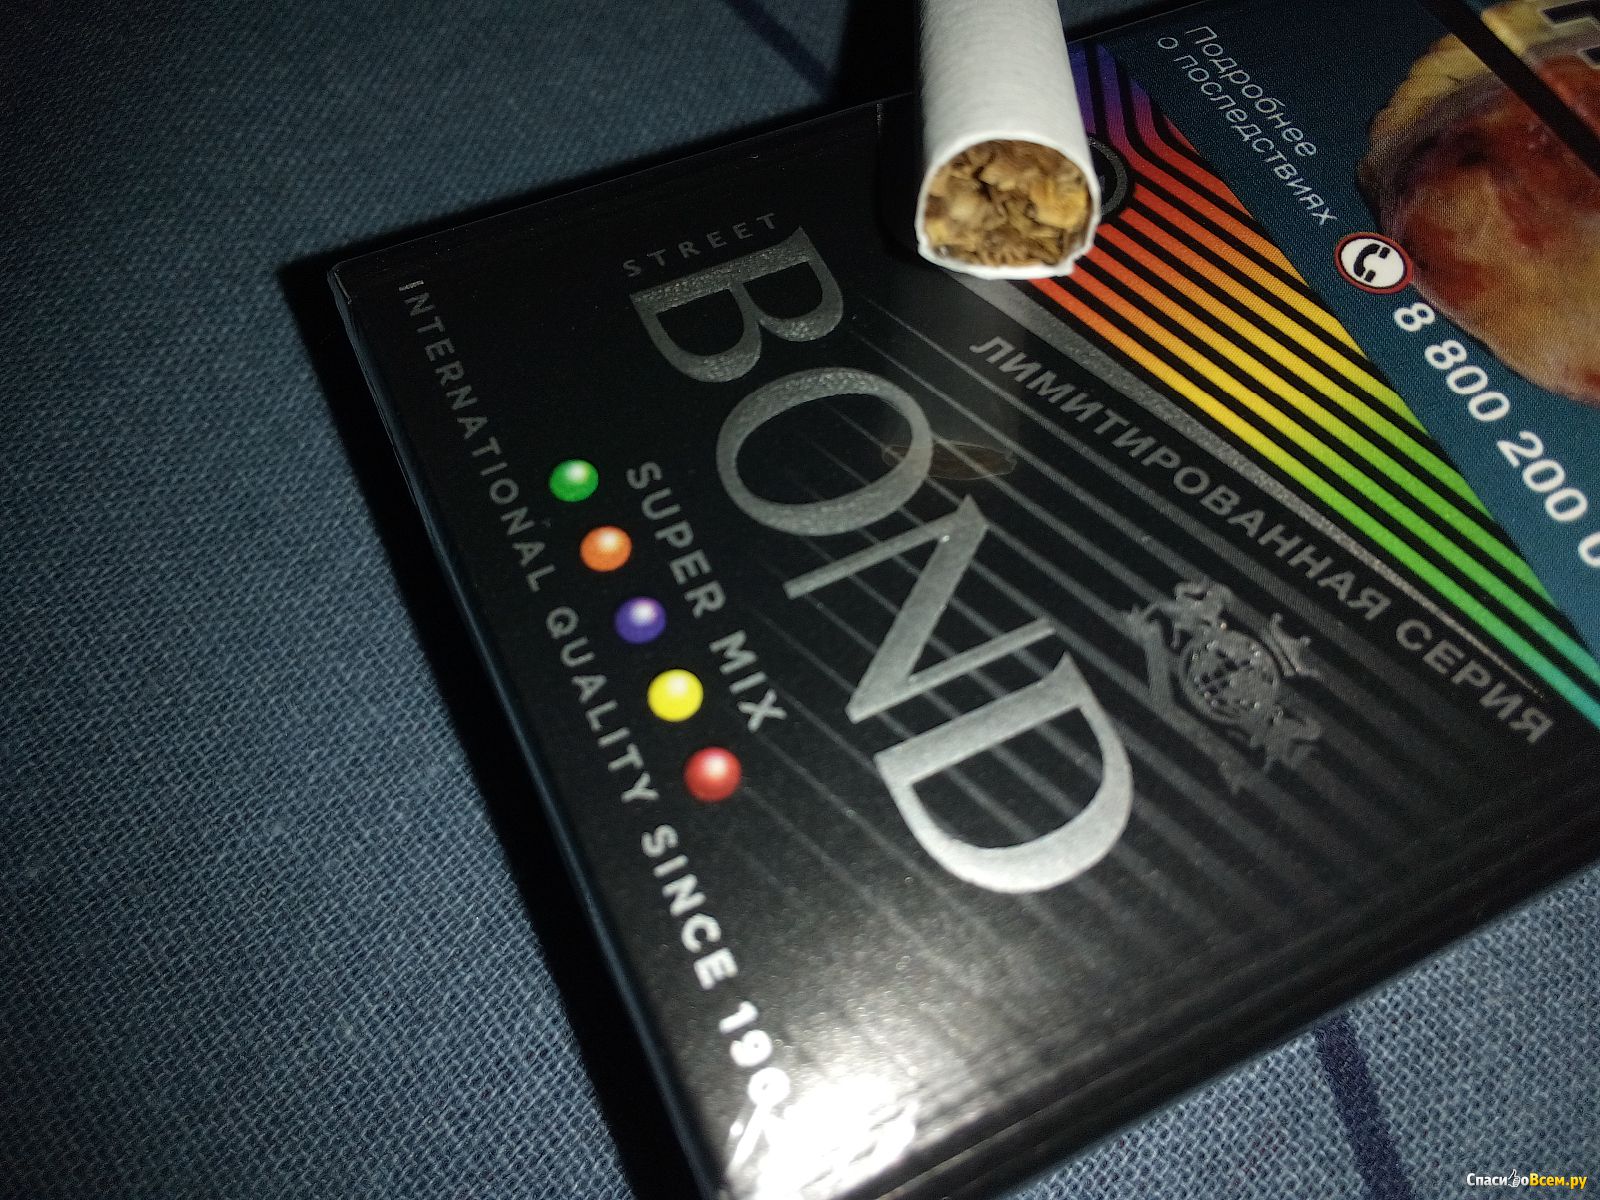 Сигареты пятерка. Сигареты Bond super Mix 5 капсул. Bond сигареты super Mix. Бонд сигареты с 5 капсулами. Сигареты Бонд с 5 кнопками.